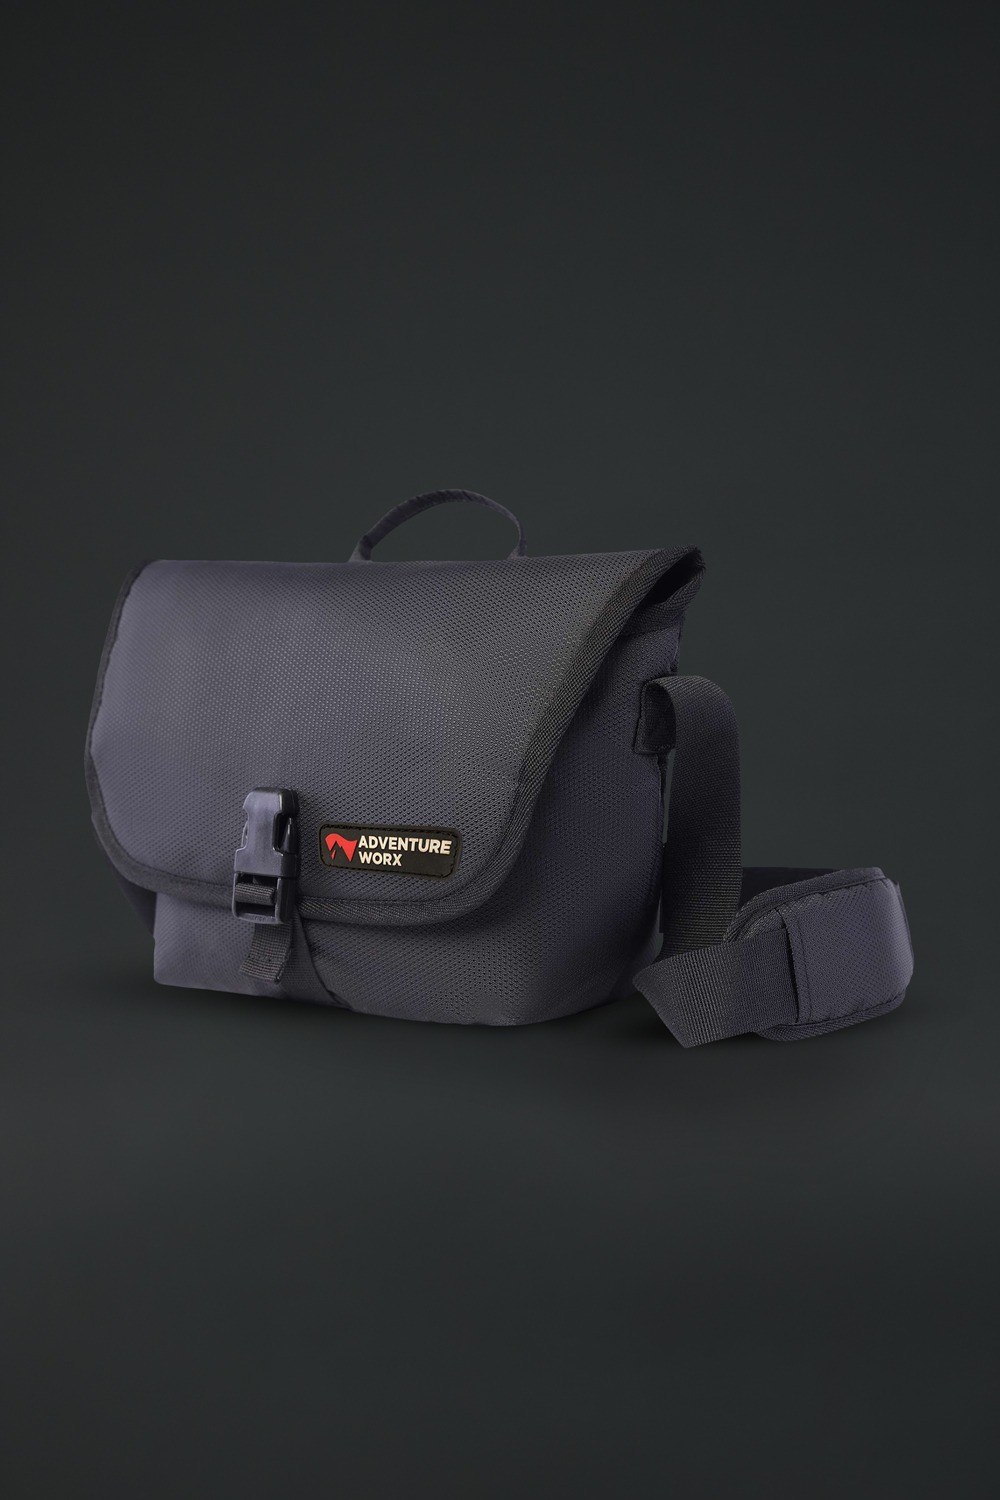 Leather Crossbody Camera Bag, Messenger Camera Bag, DSLR Camera Accessories  - Etsy